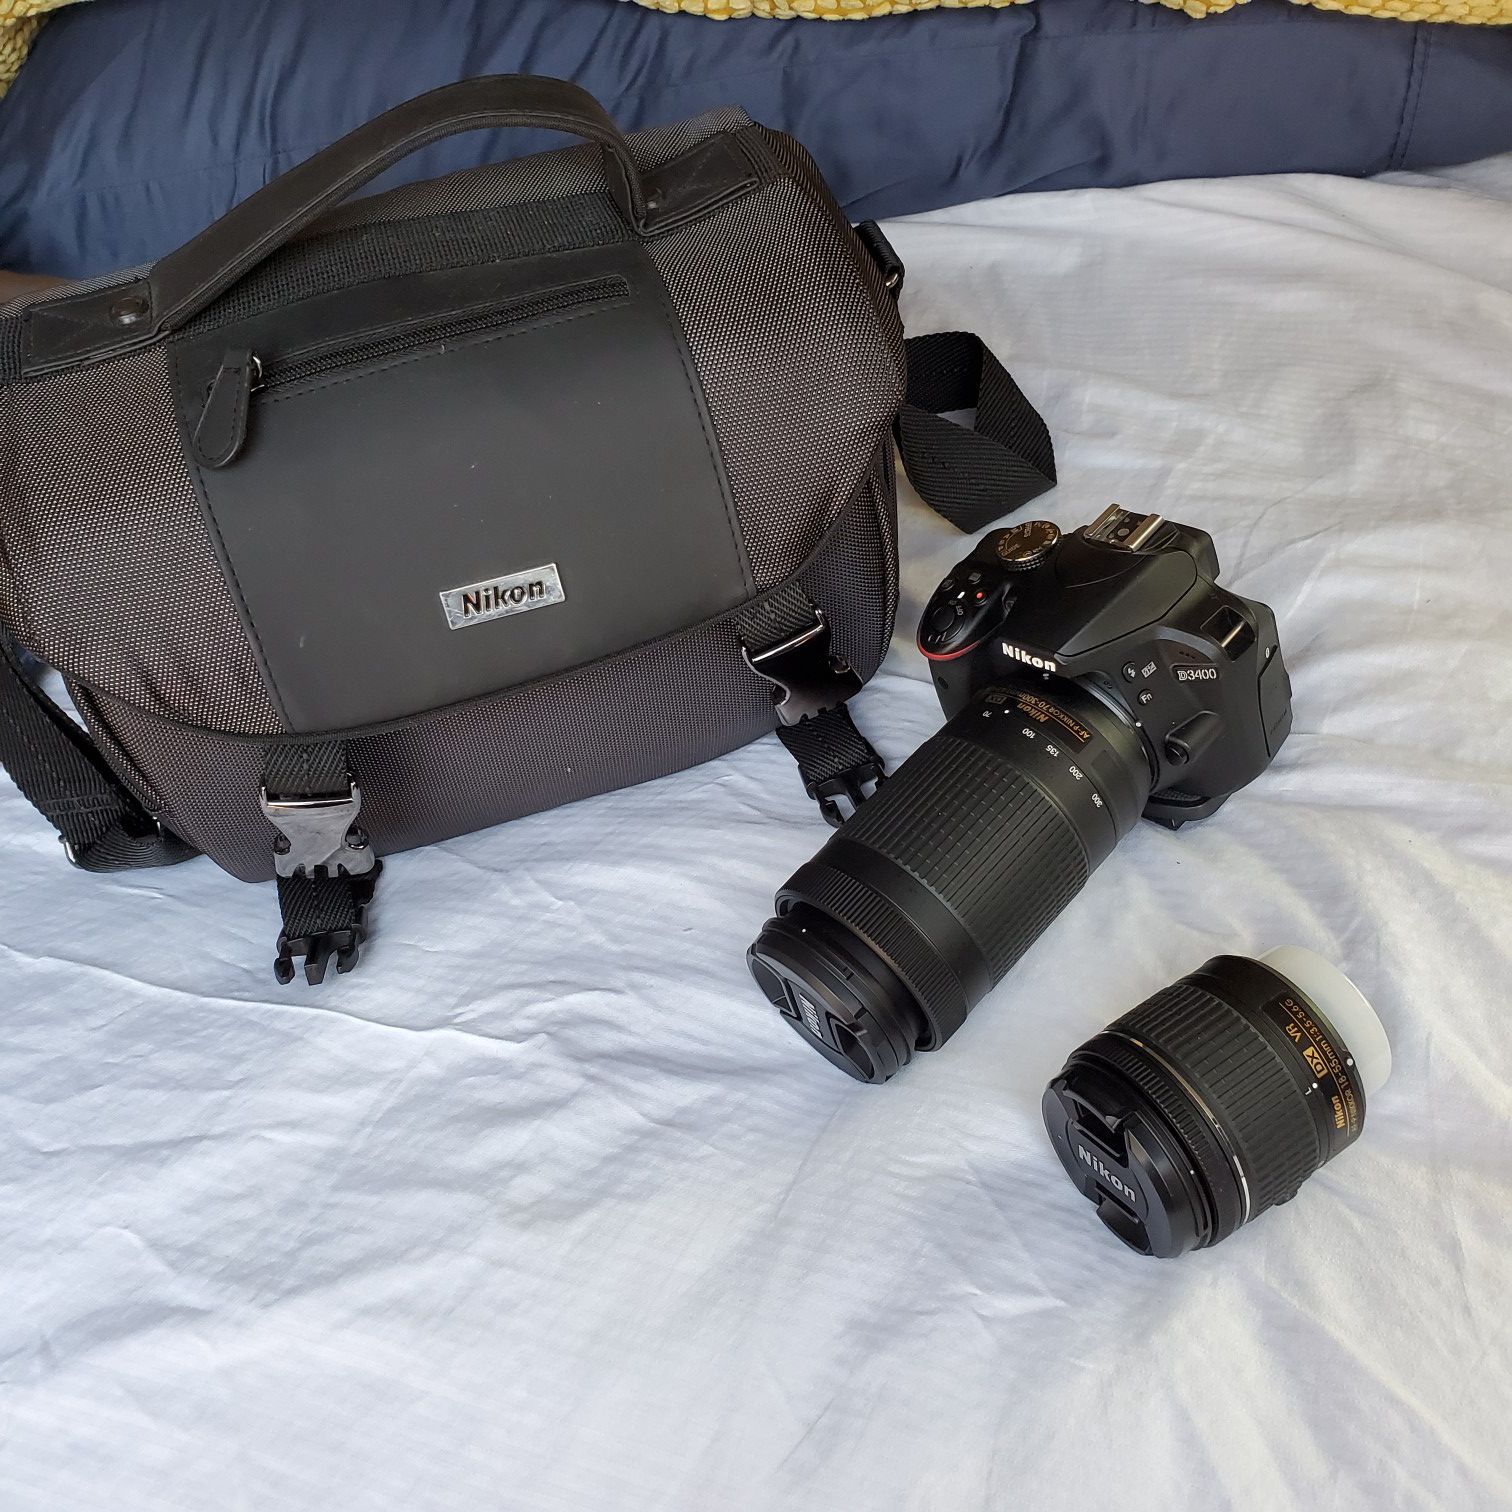 Nikon D3400 camera, additional lense, case, charger